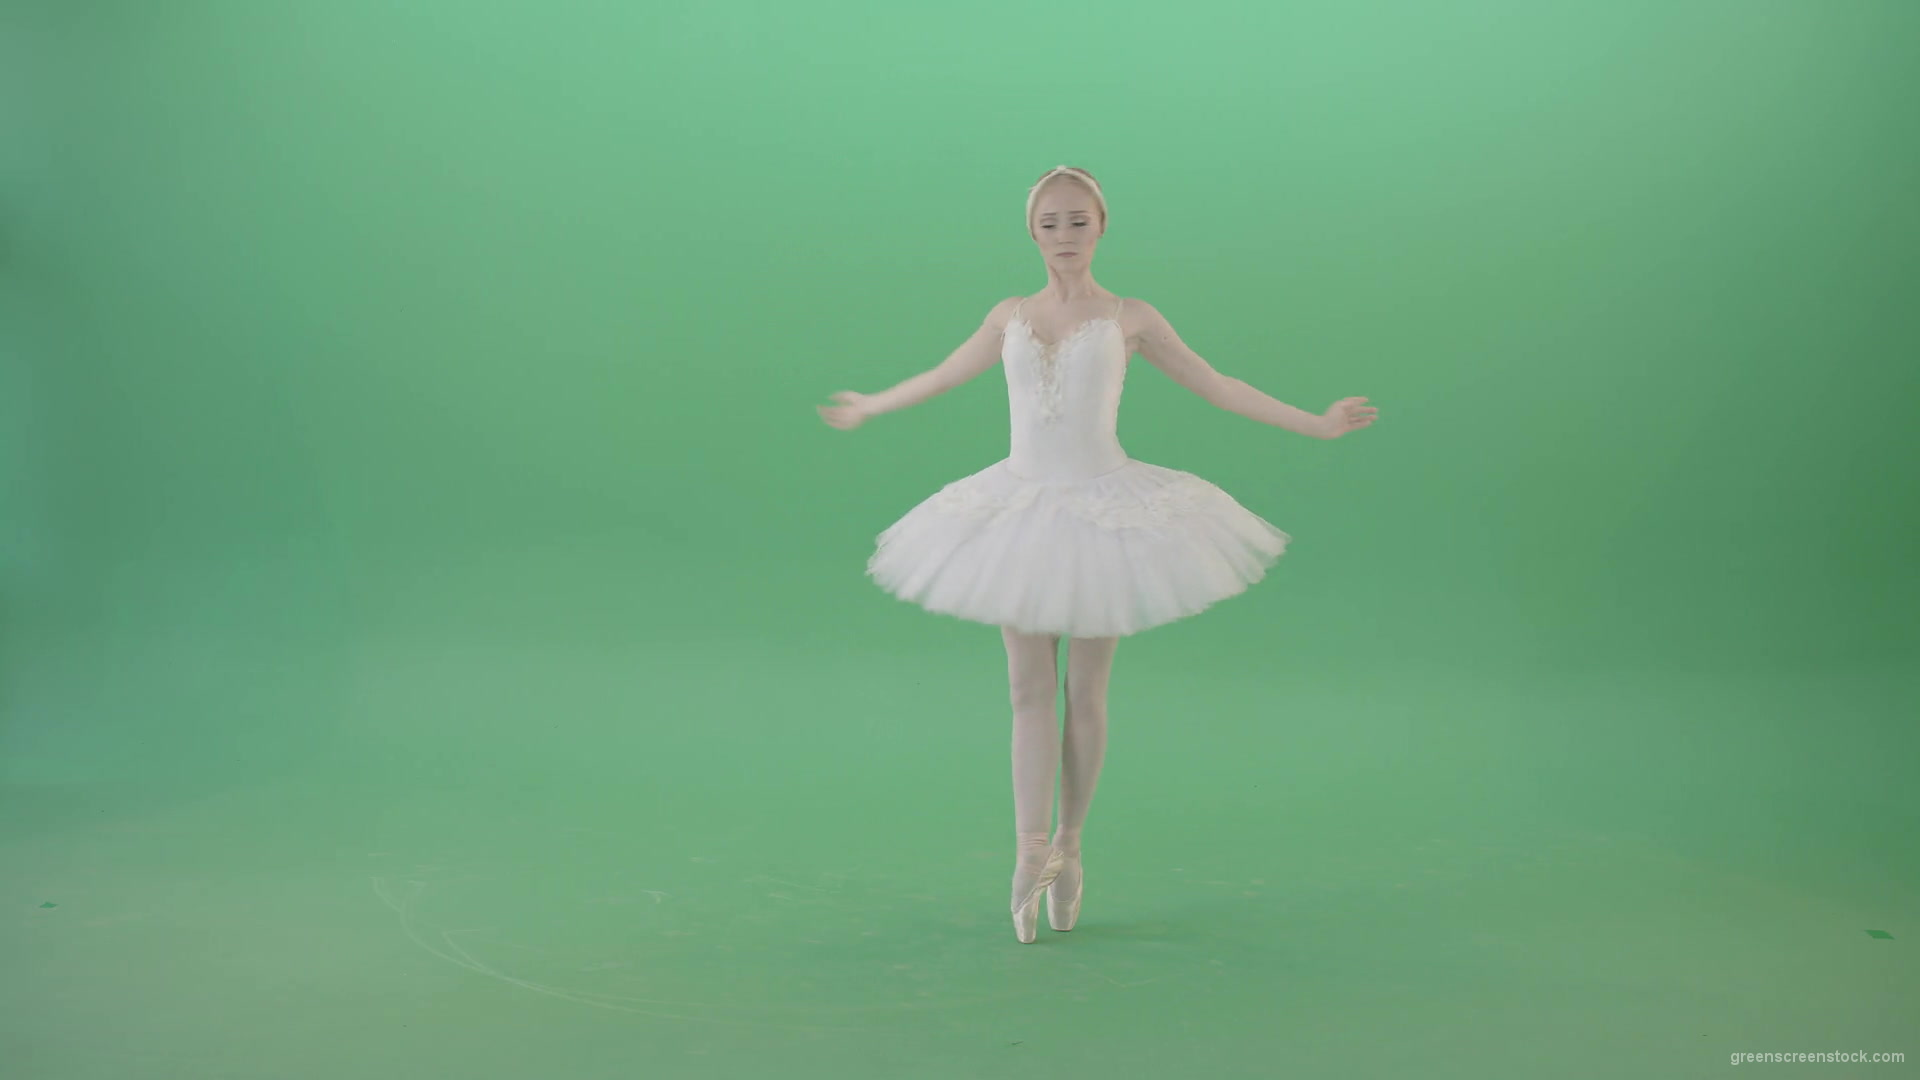 Grace-Ballerina-dance-classical-ballet-art-in-white-costume-on-green-screen-4K-Video-Footage-1920_005 Green Screen Stock